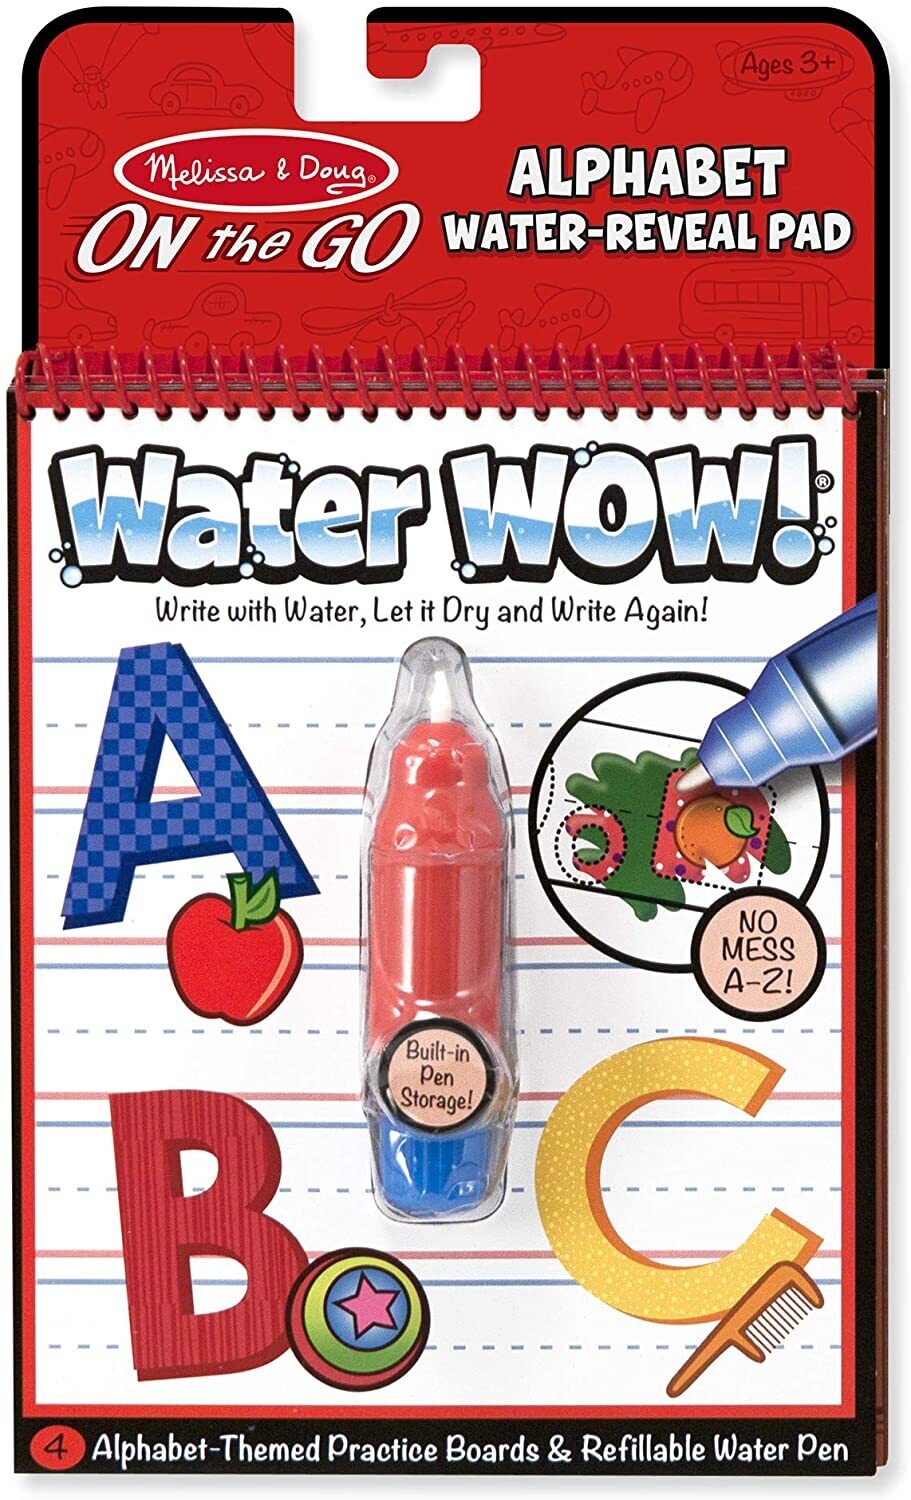 MD 5389 Water Wow Alphabet